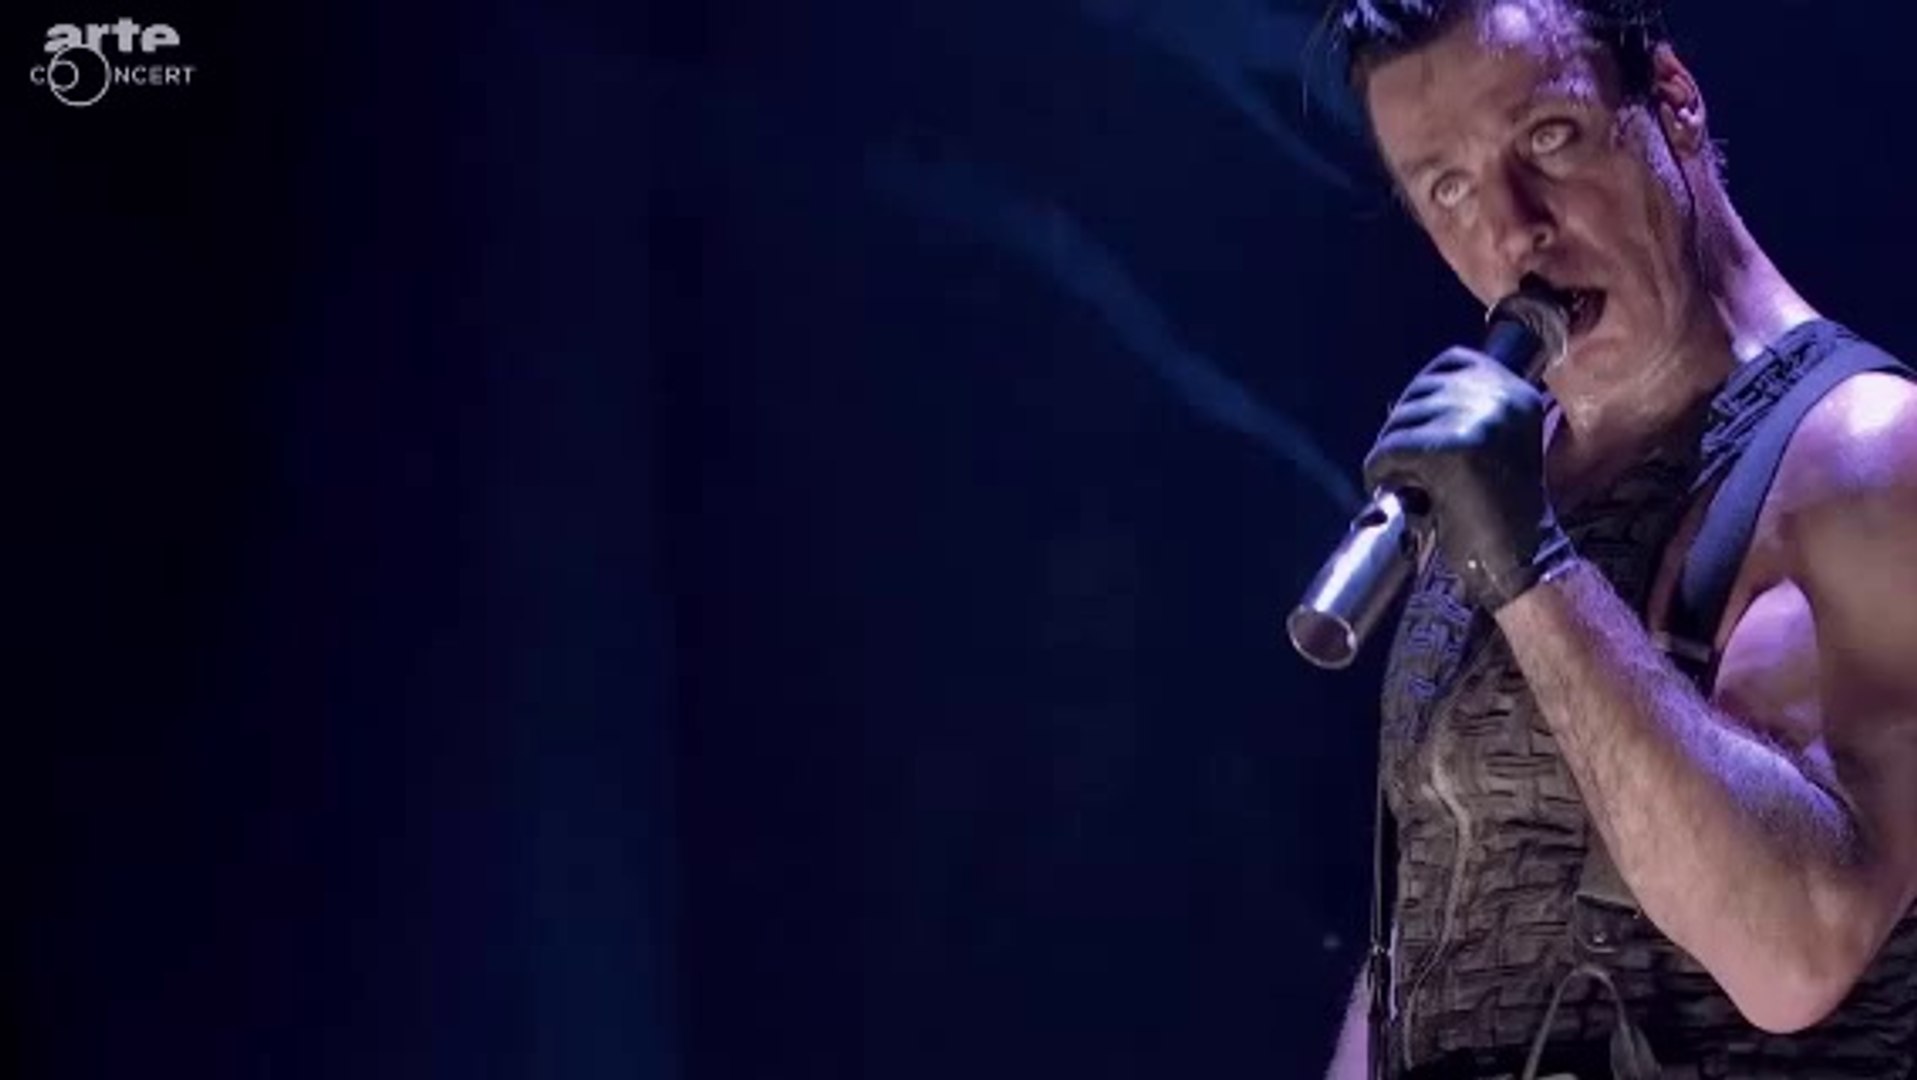 Слушать рамштайн все песни подряд без остановки. Rammstein Live Madison Square Garden 2010. Рамштайн 2015. Rammstein 2003.